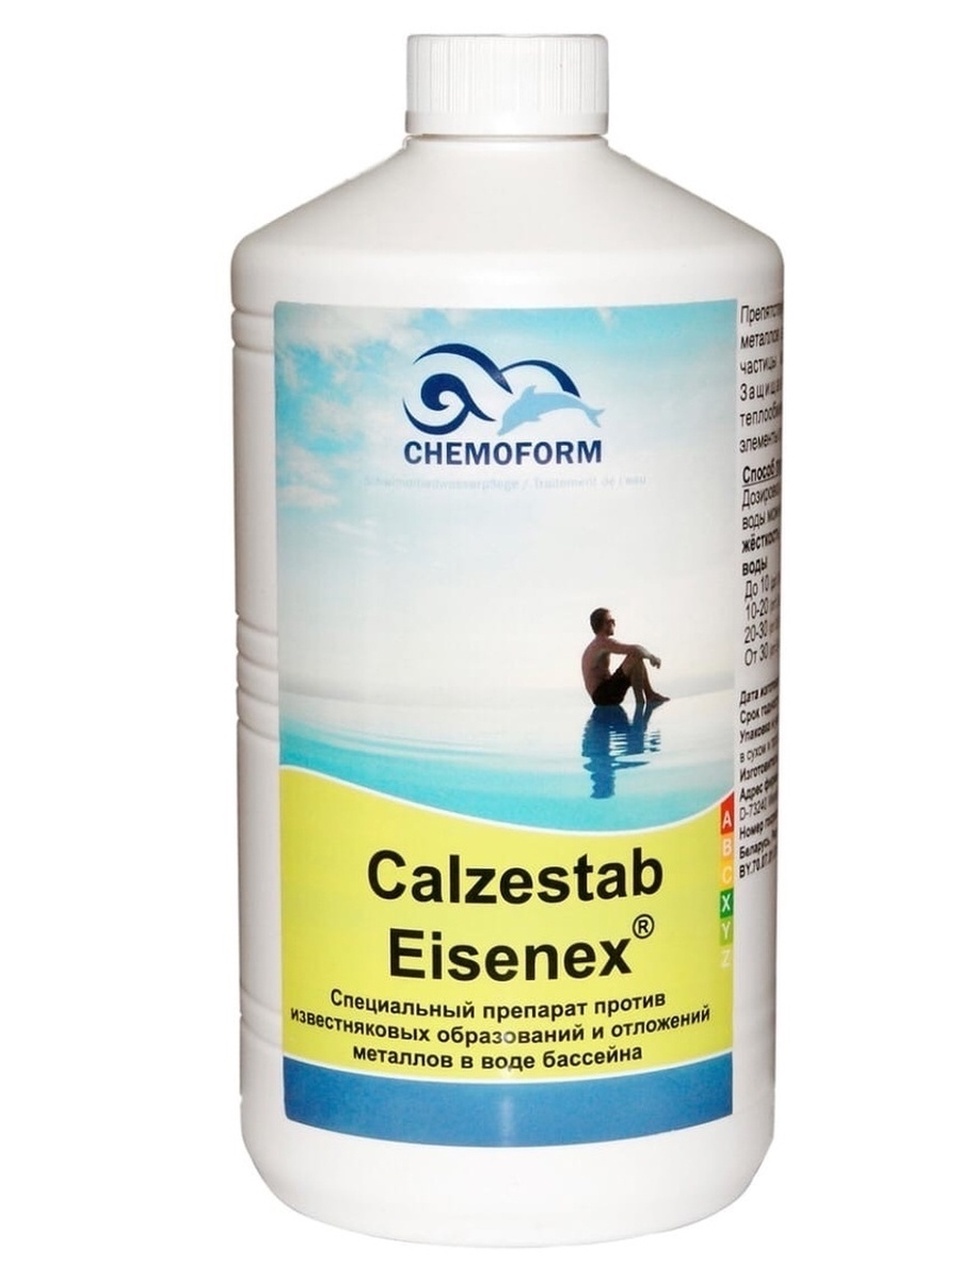 Chemoform Calzestab Eisenex 1л - 0 ₽, заказать онлайн.